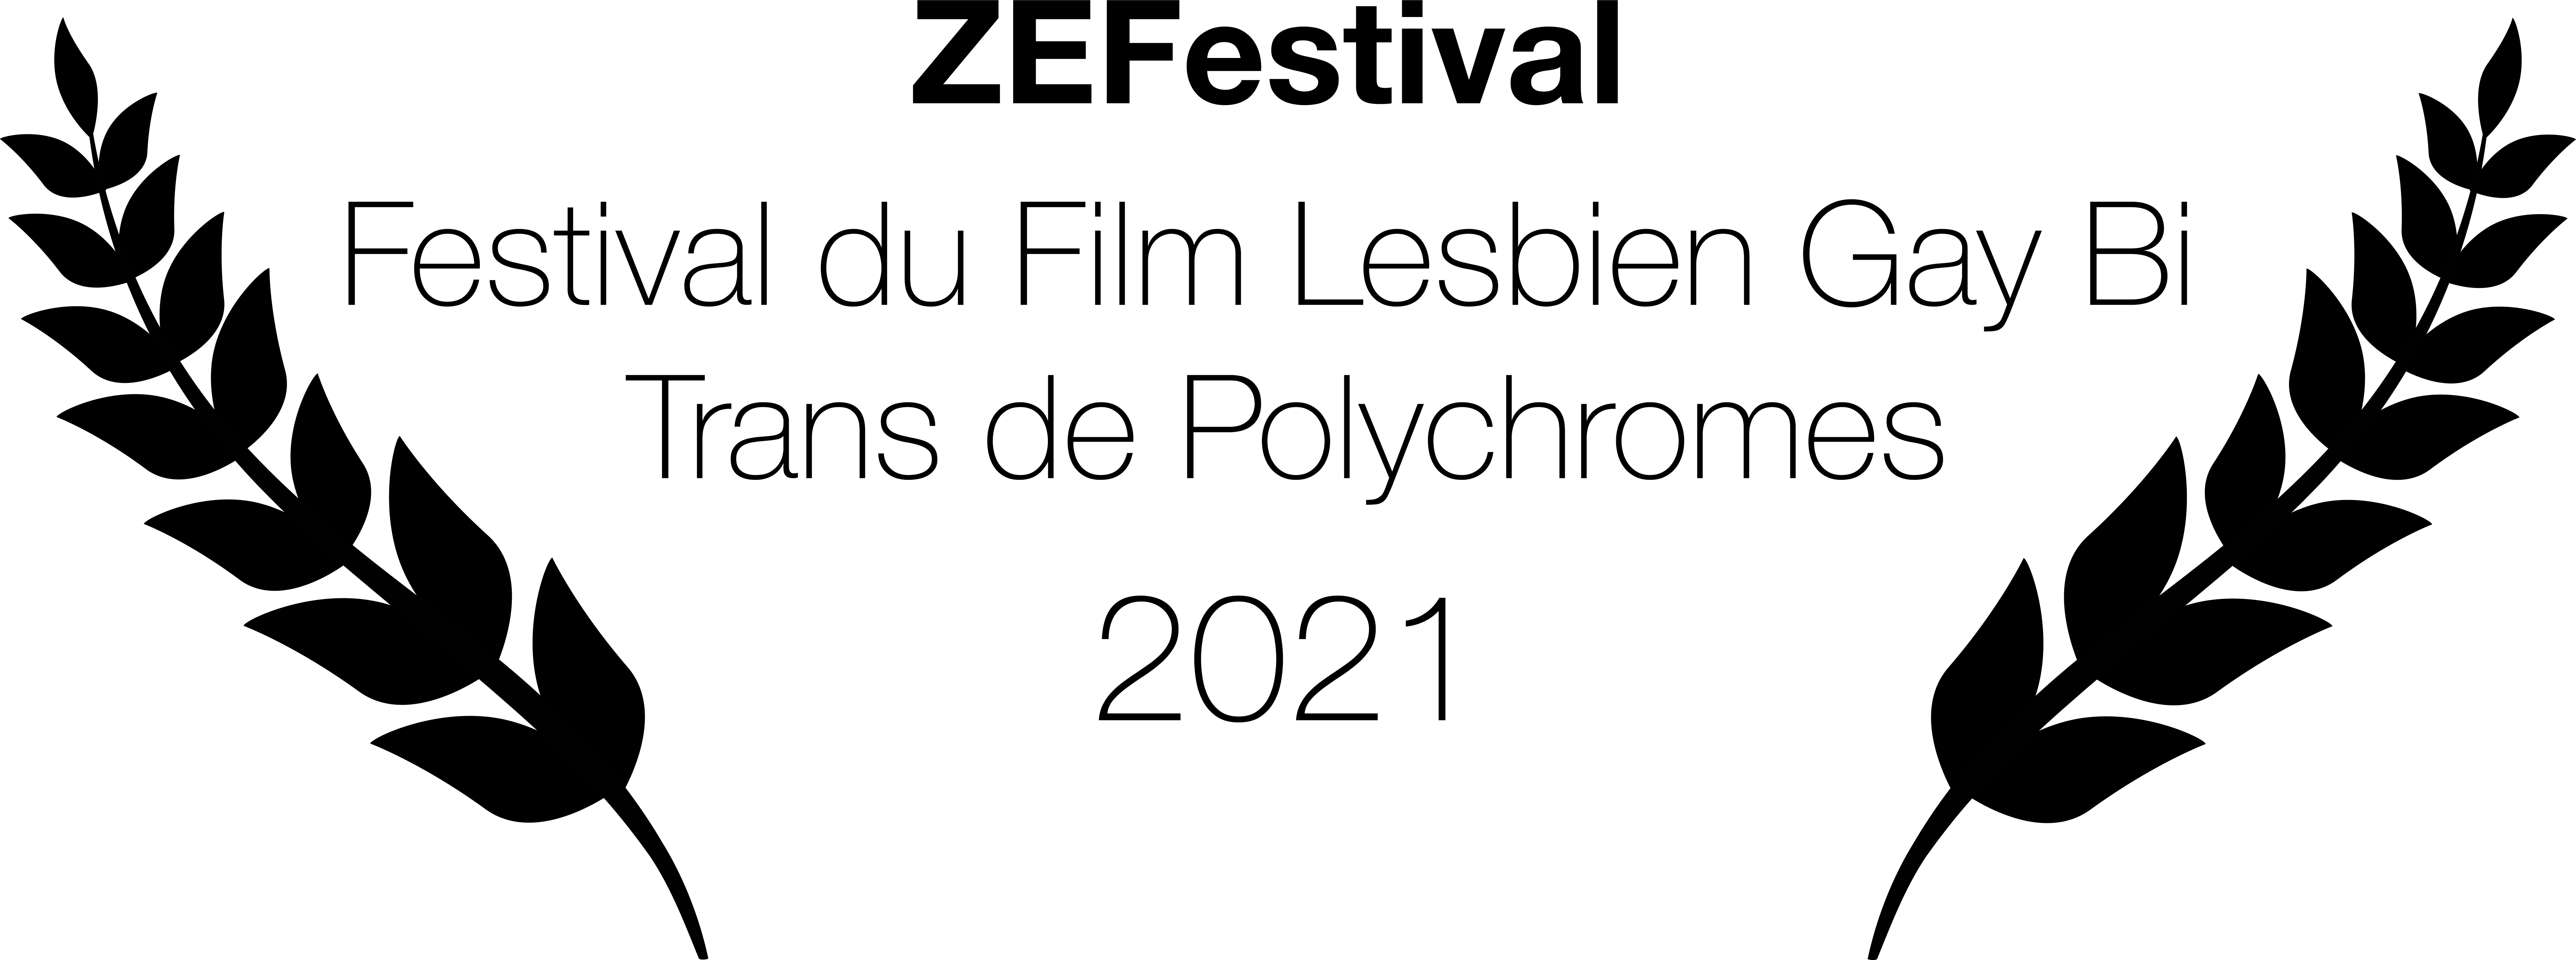 ZEFestival - Festival du Film Lesbien Gay Bi Trans de Polychromes